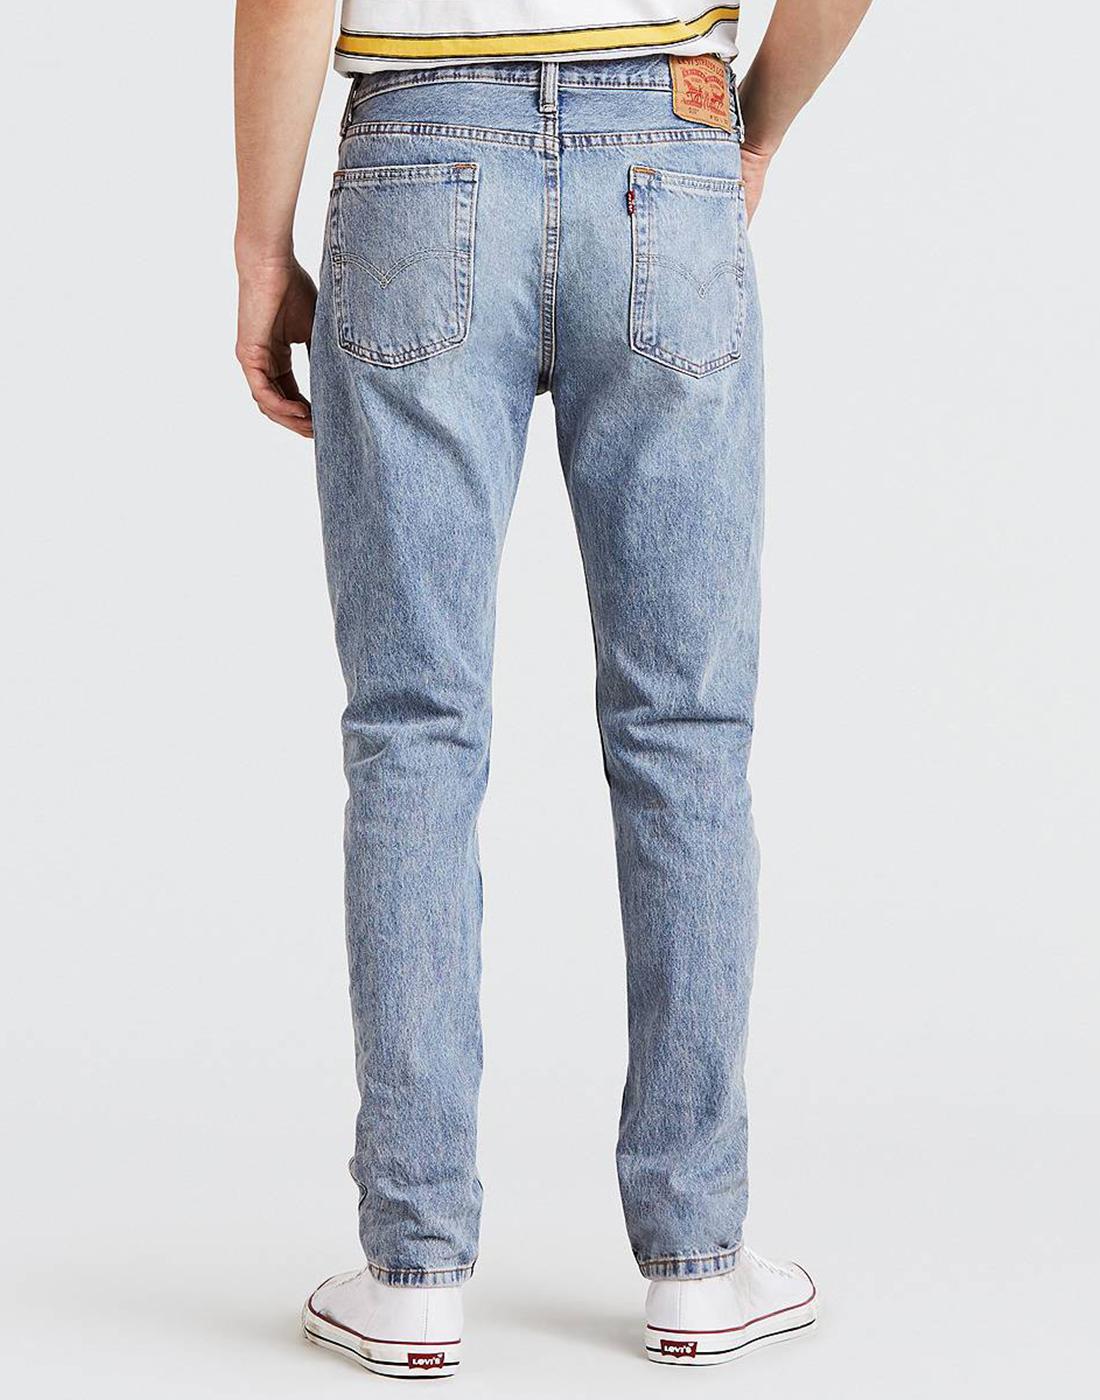 gingham skinny jeans